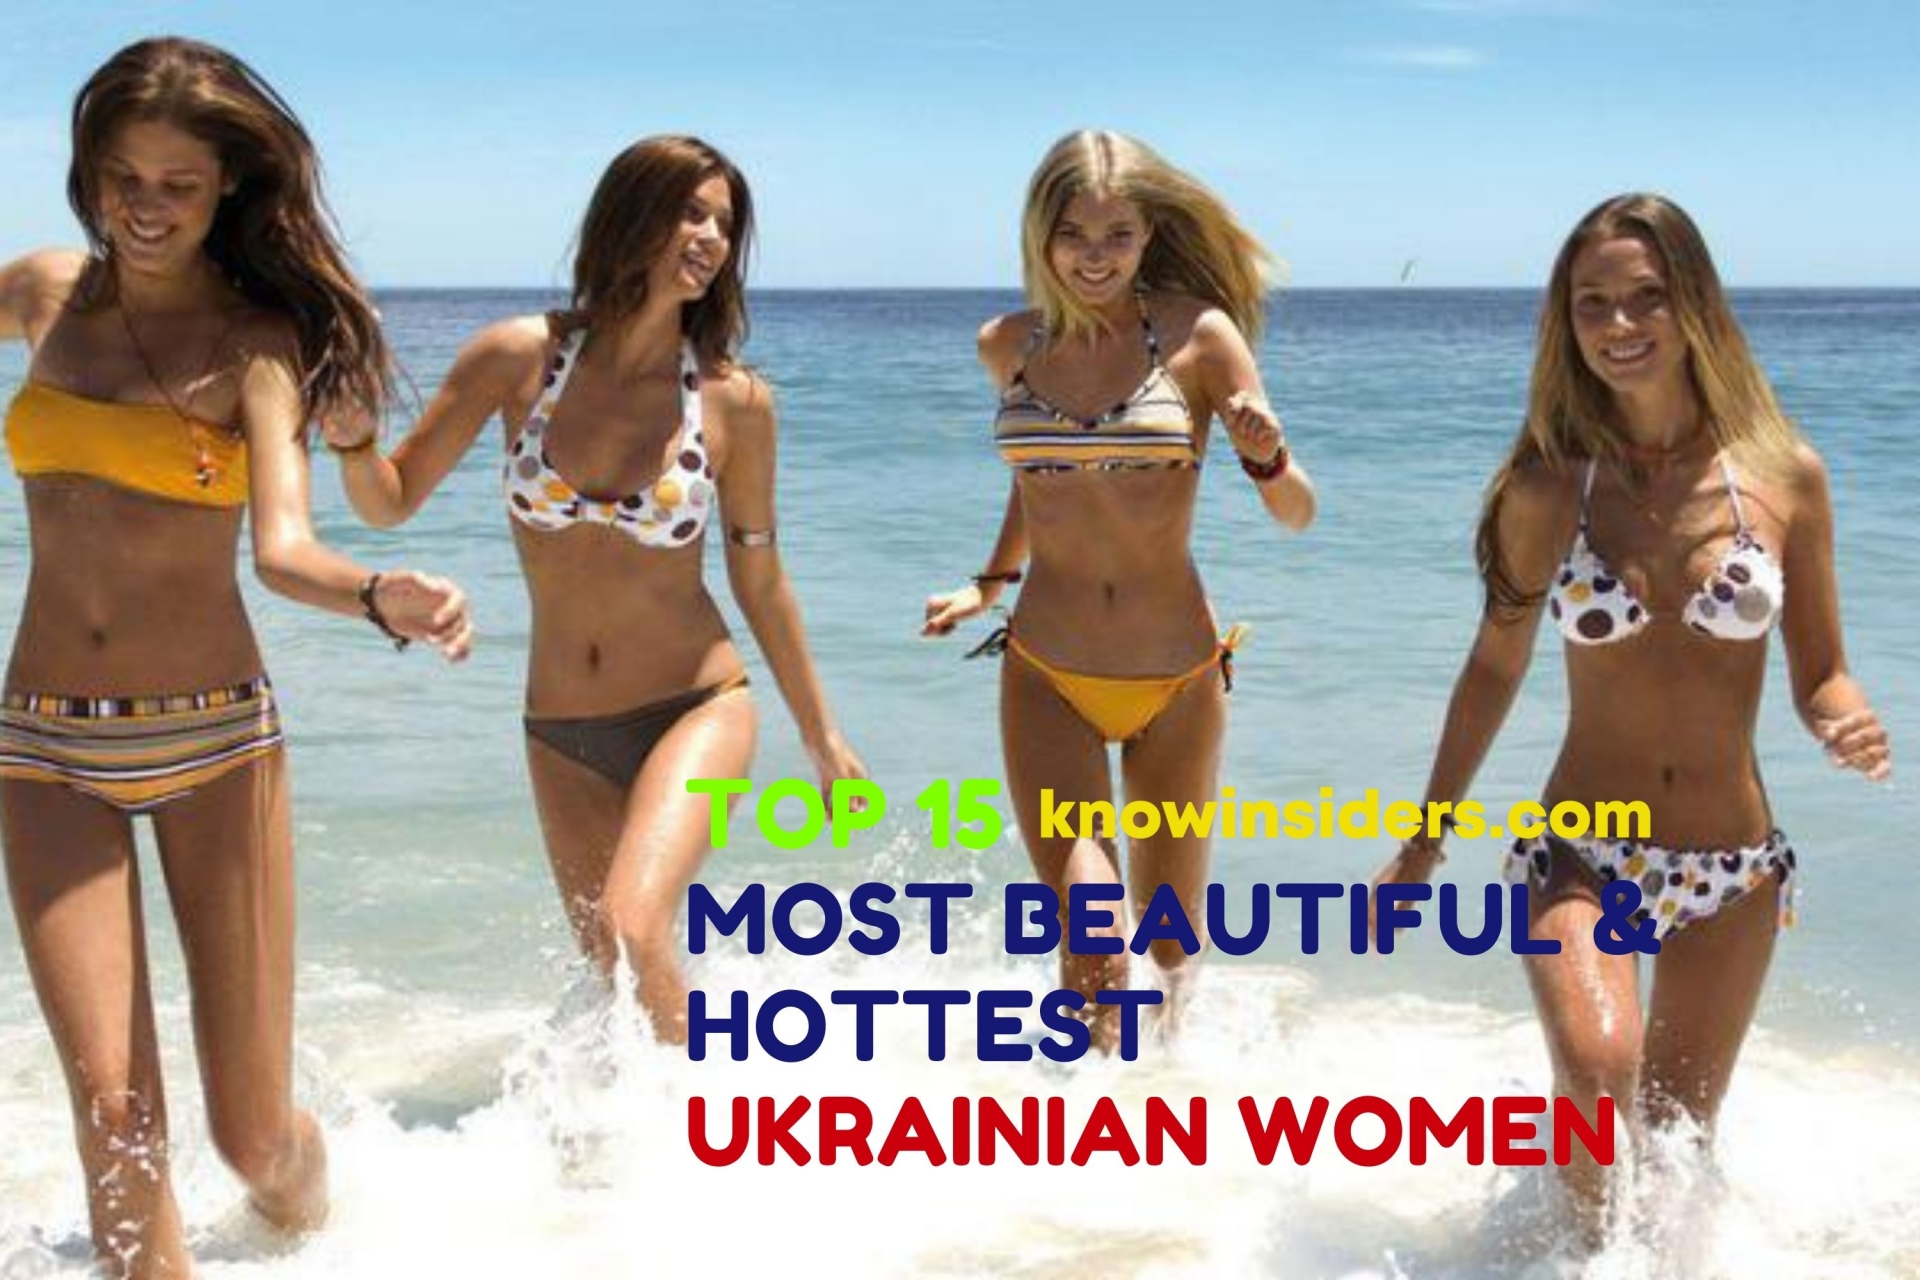 Top 15 Most Beautiful Ukrainian Women of All Time